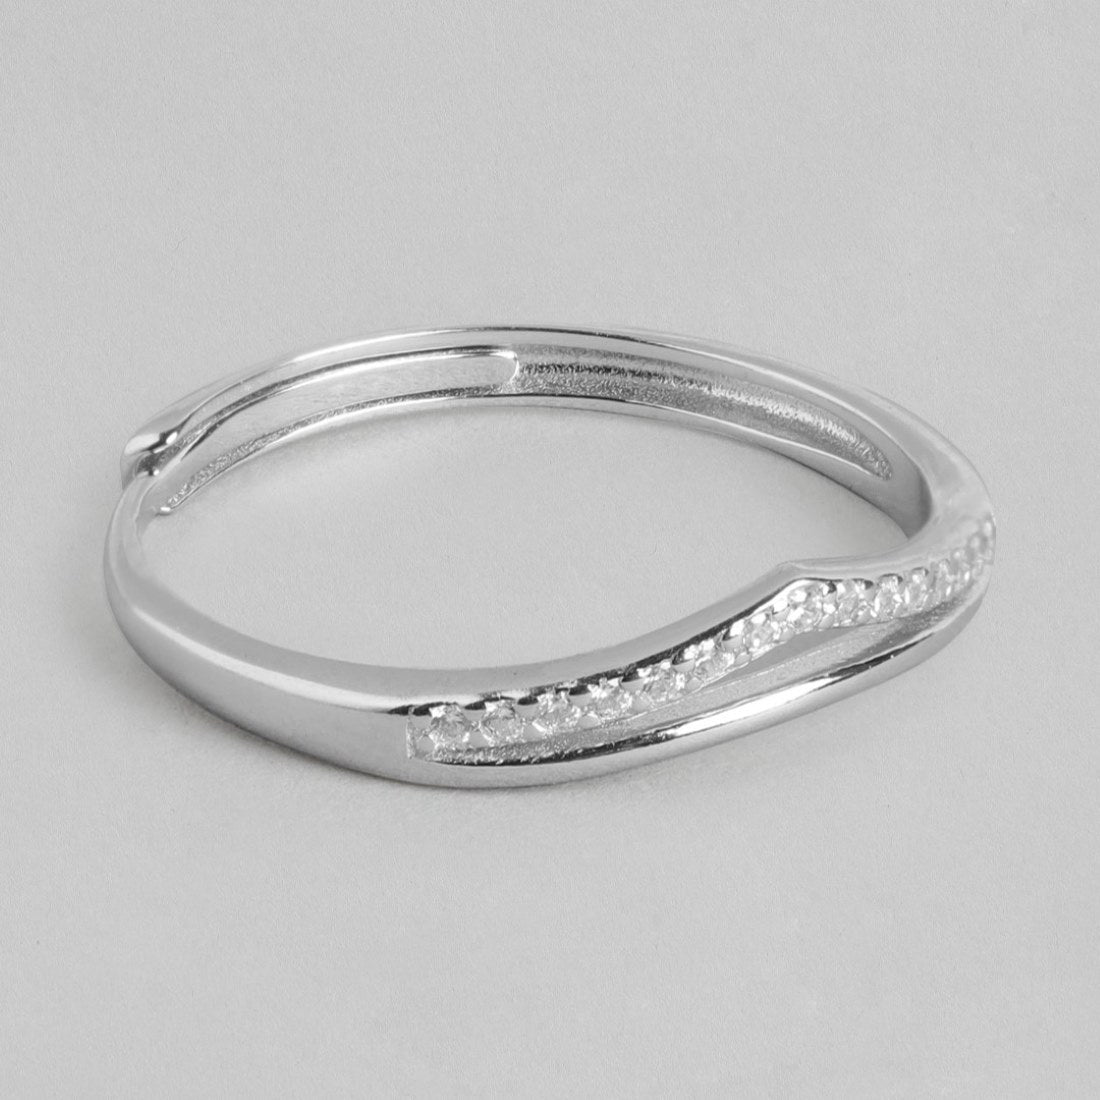 The Minimalist 925 Silver Ring (Adjustable)